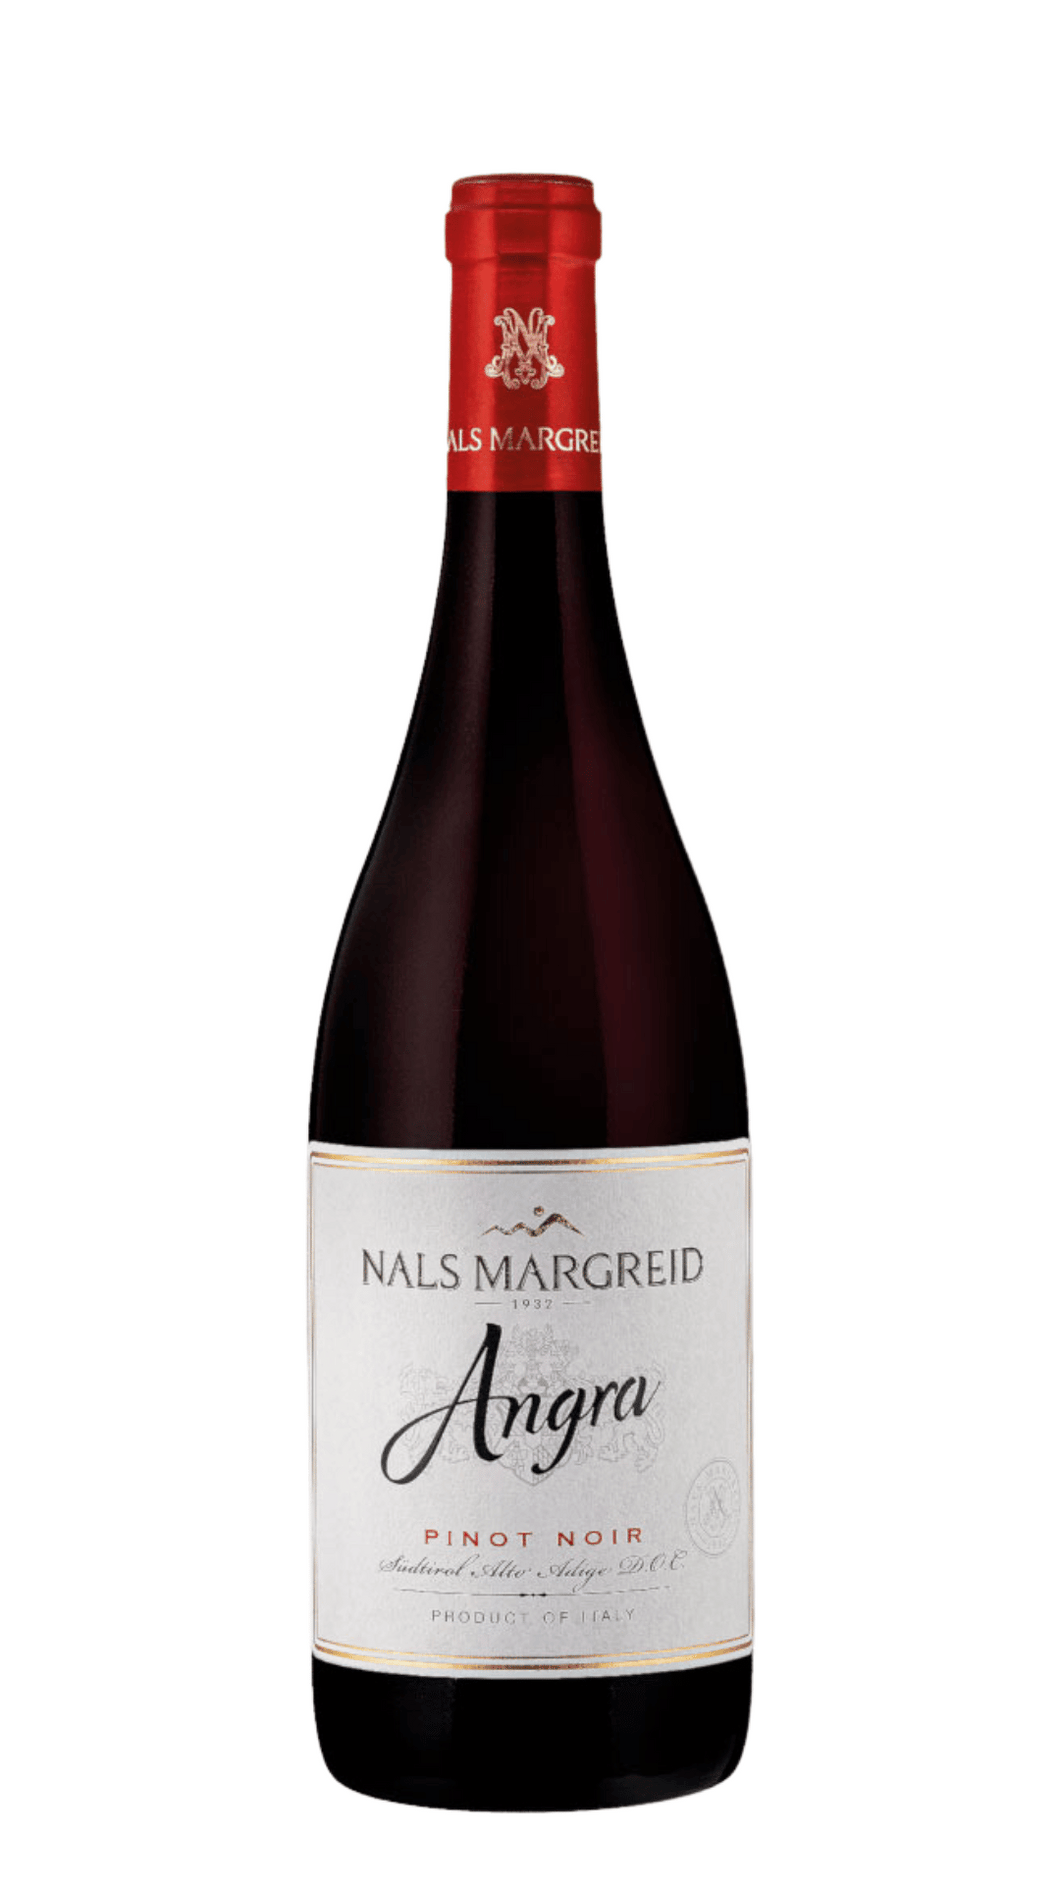 Angra Pinot Noir DOC Nals Margreid